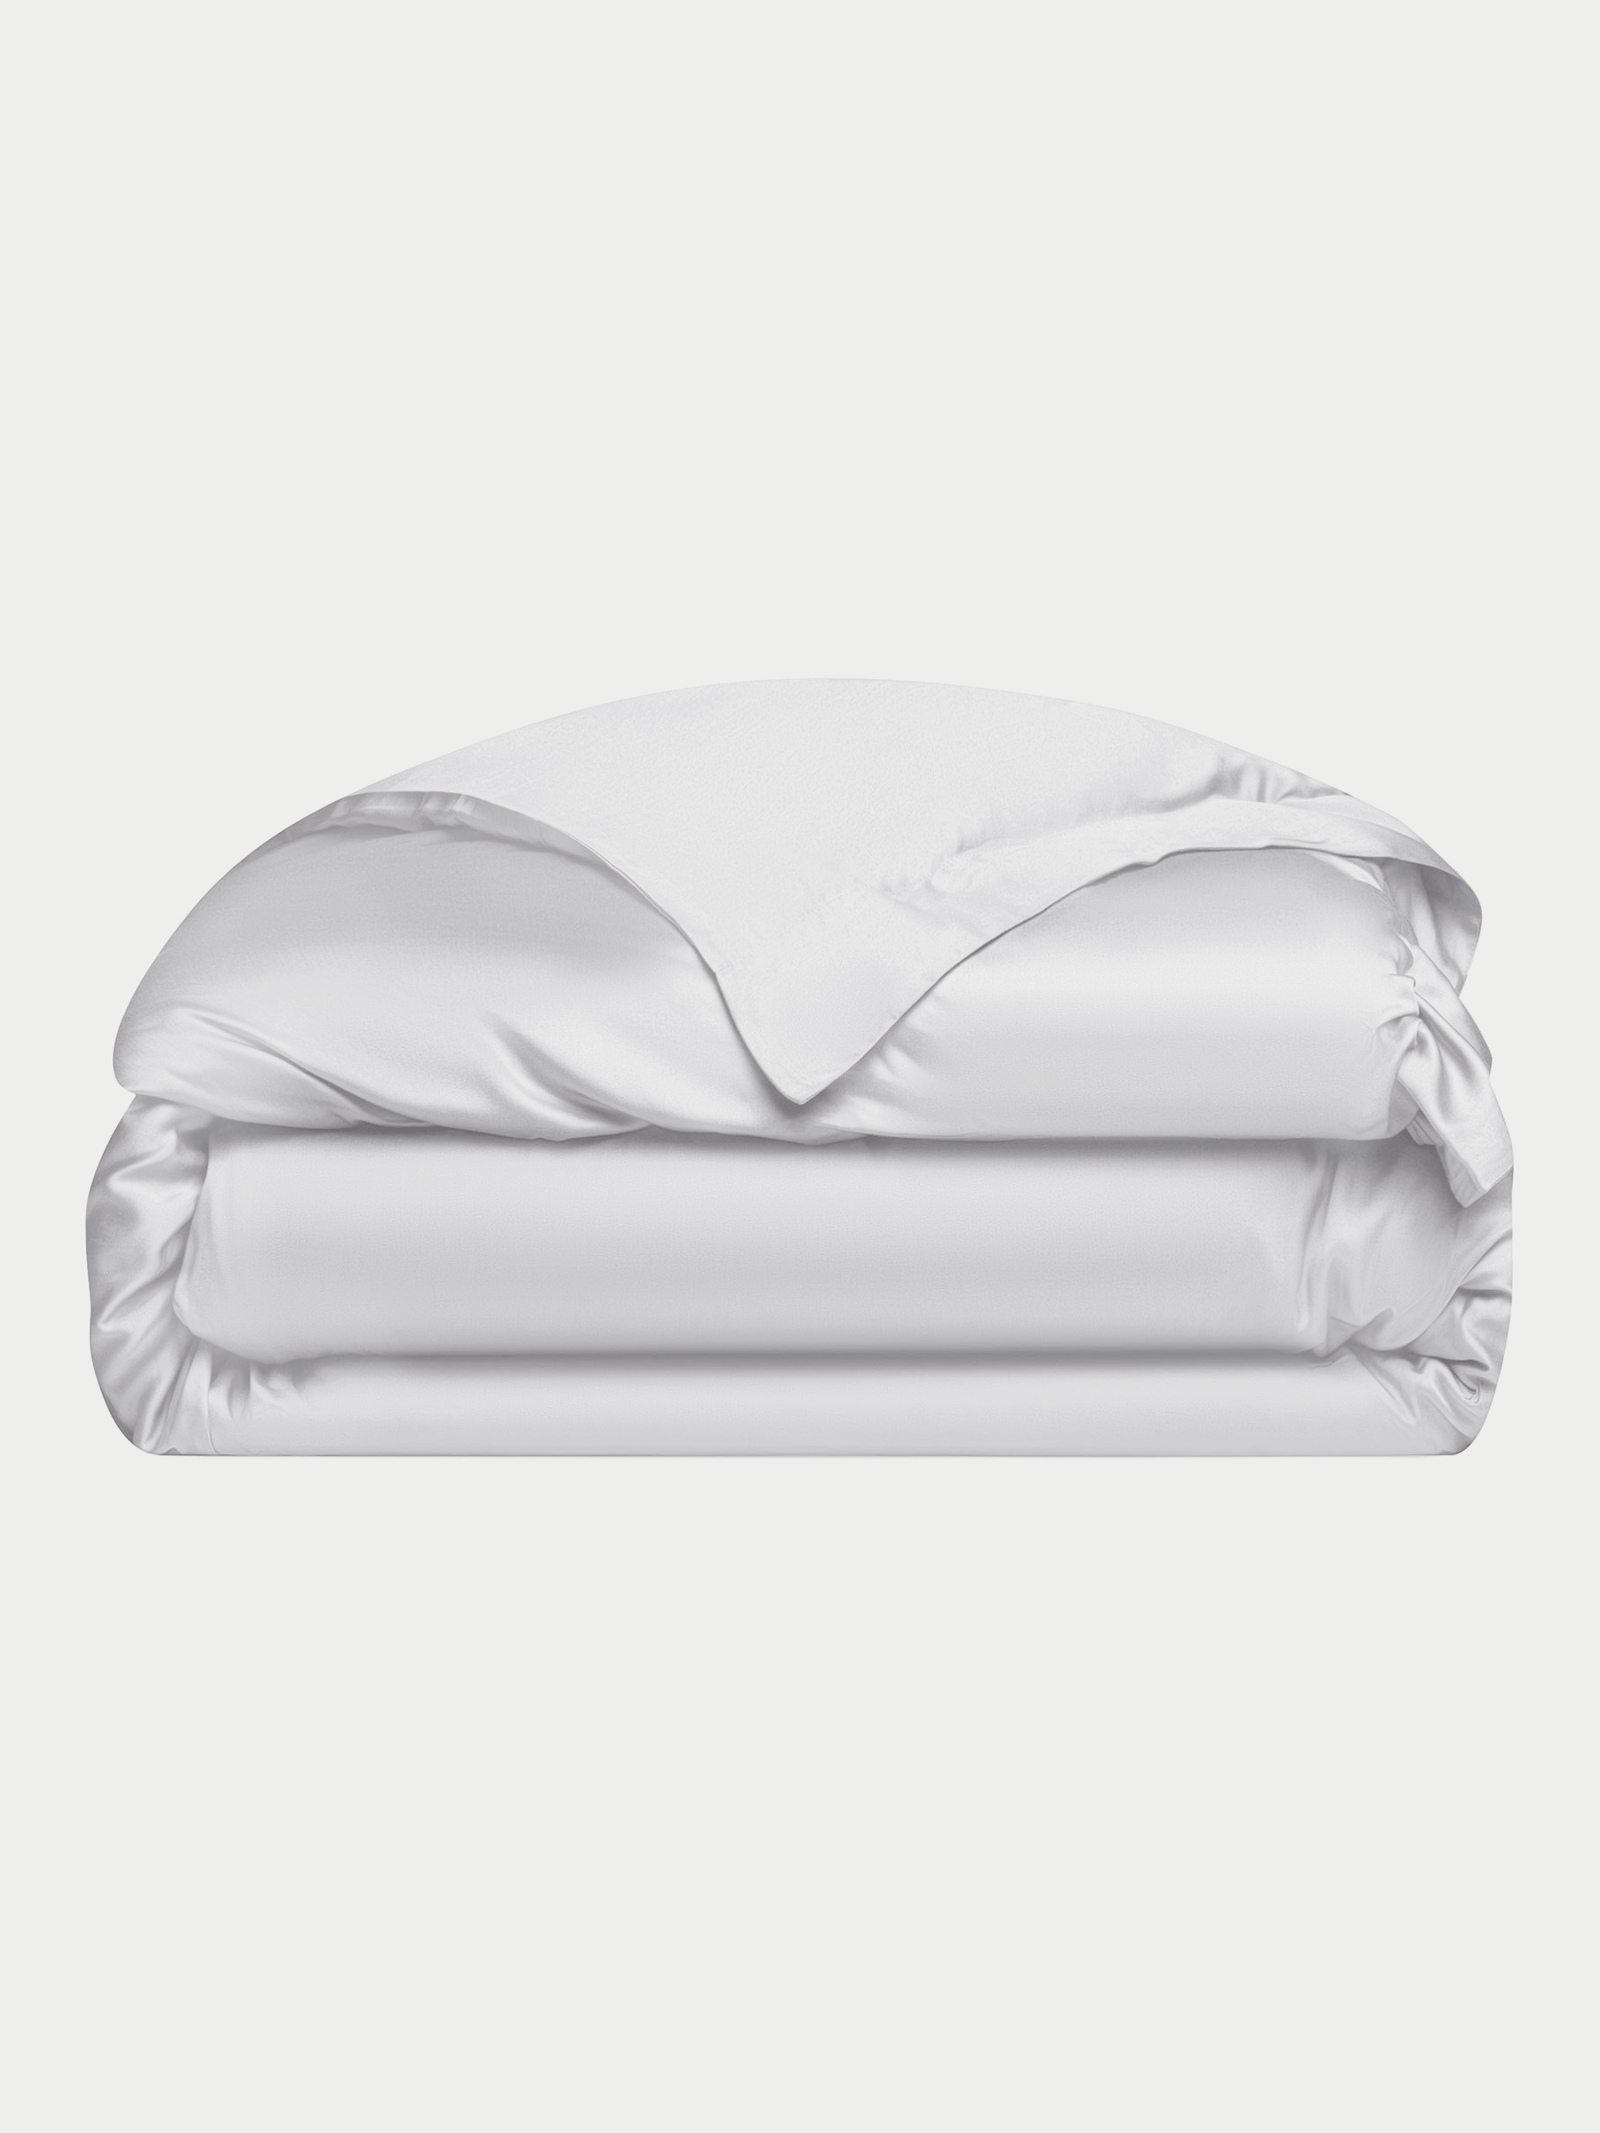 White duvet cover folded with white background 